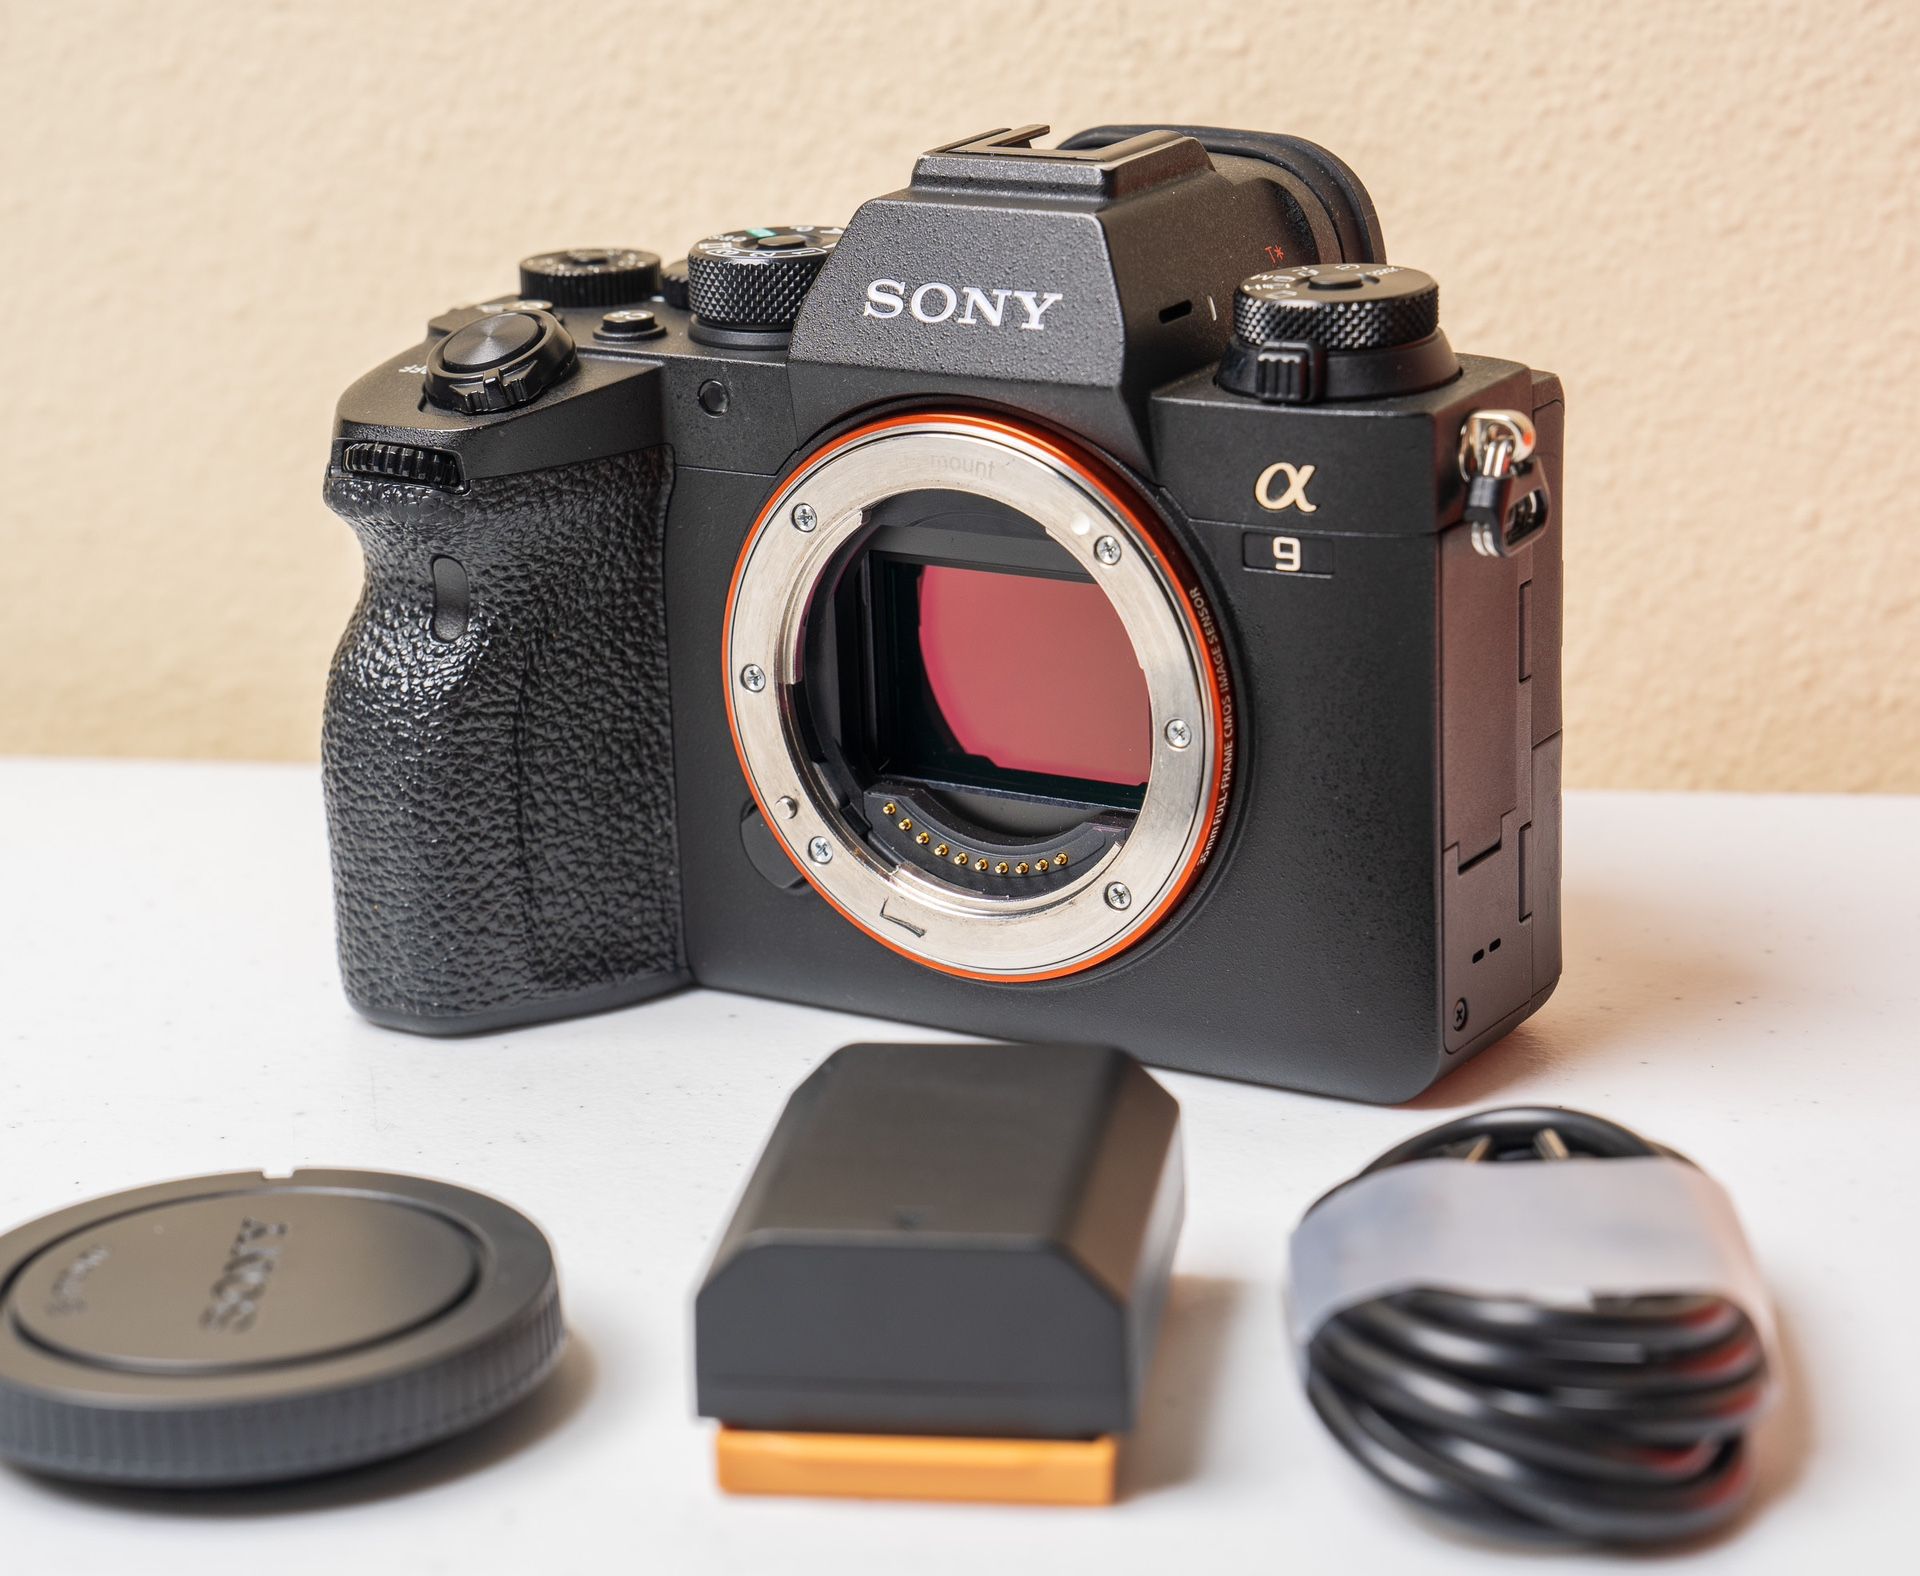 Sony a9 II Camera body (ILCE-9M2) - USA model (Open To Trades)